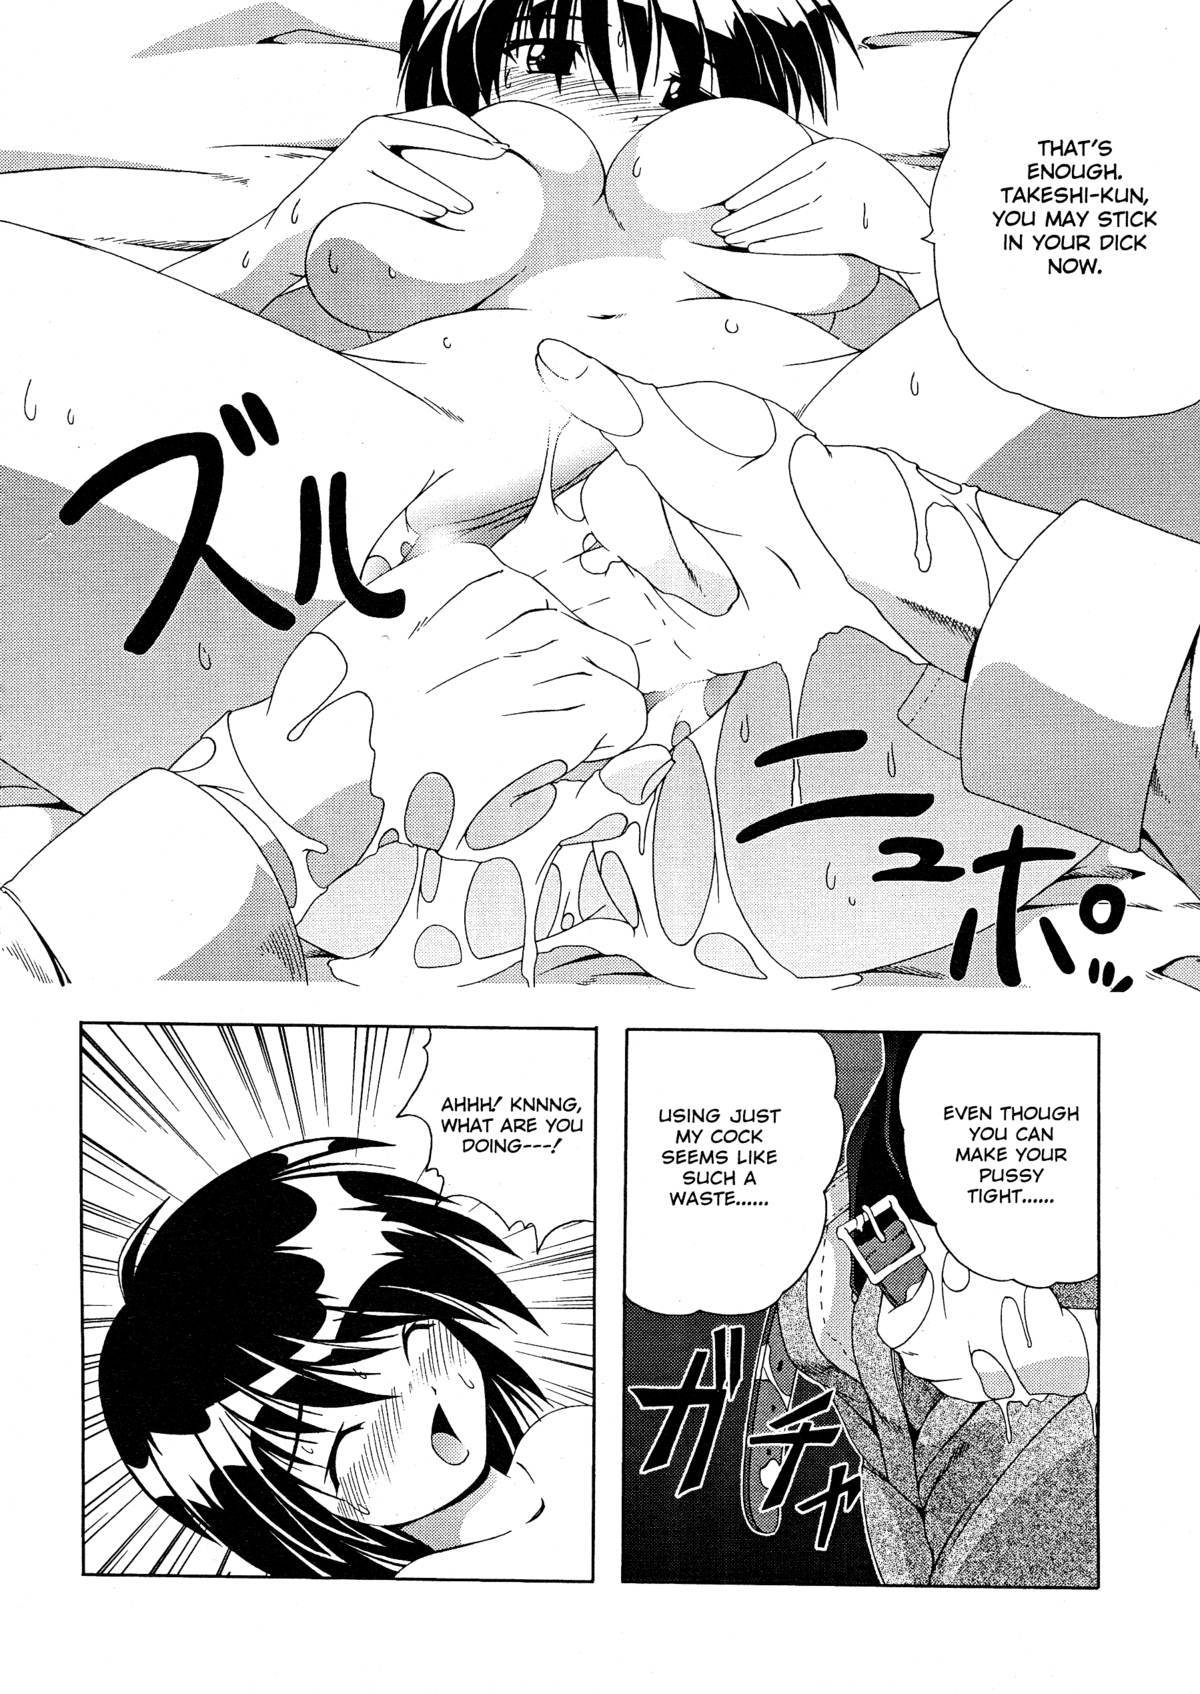 Flashbang!Hi-res 167 hentai manga